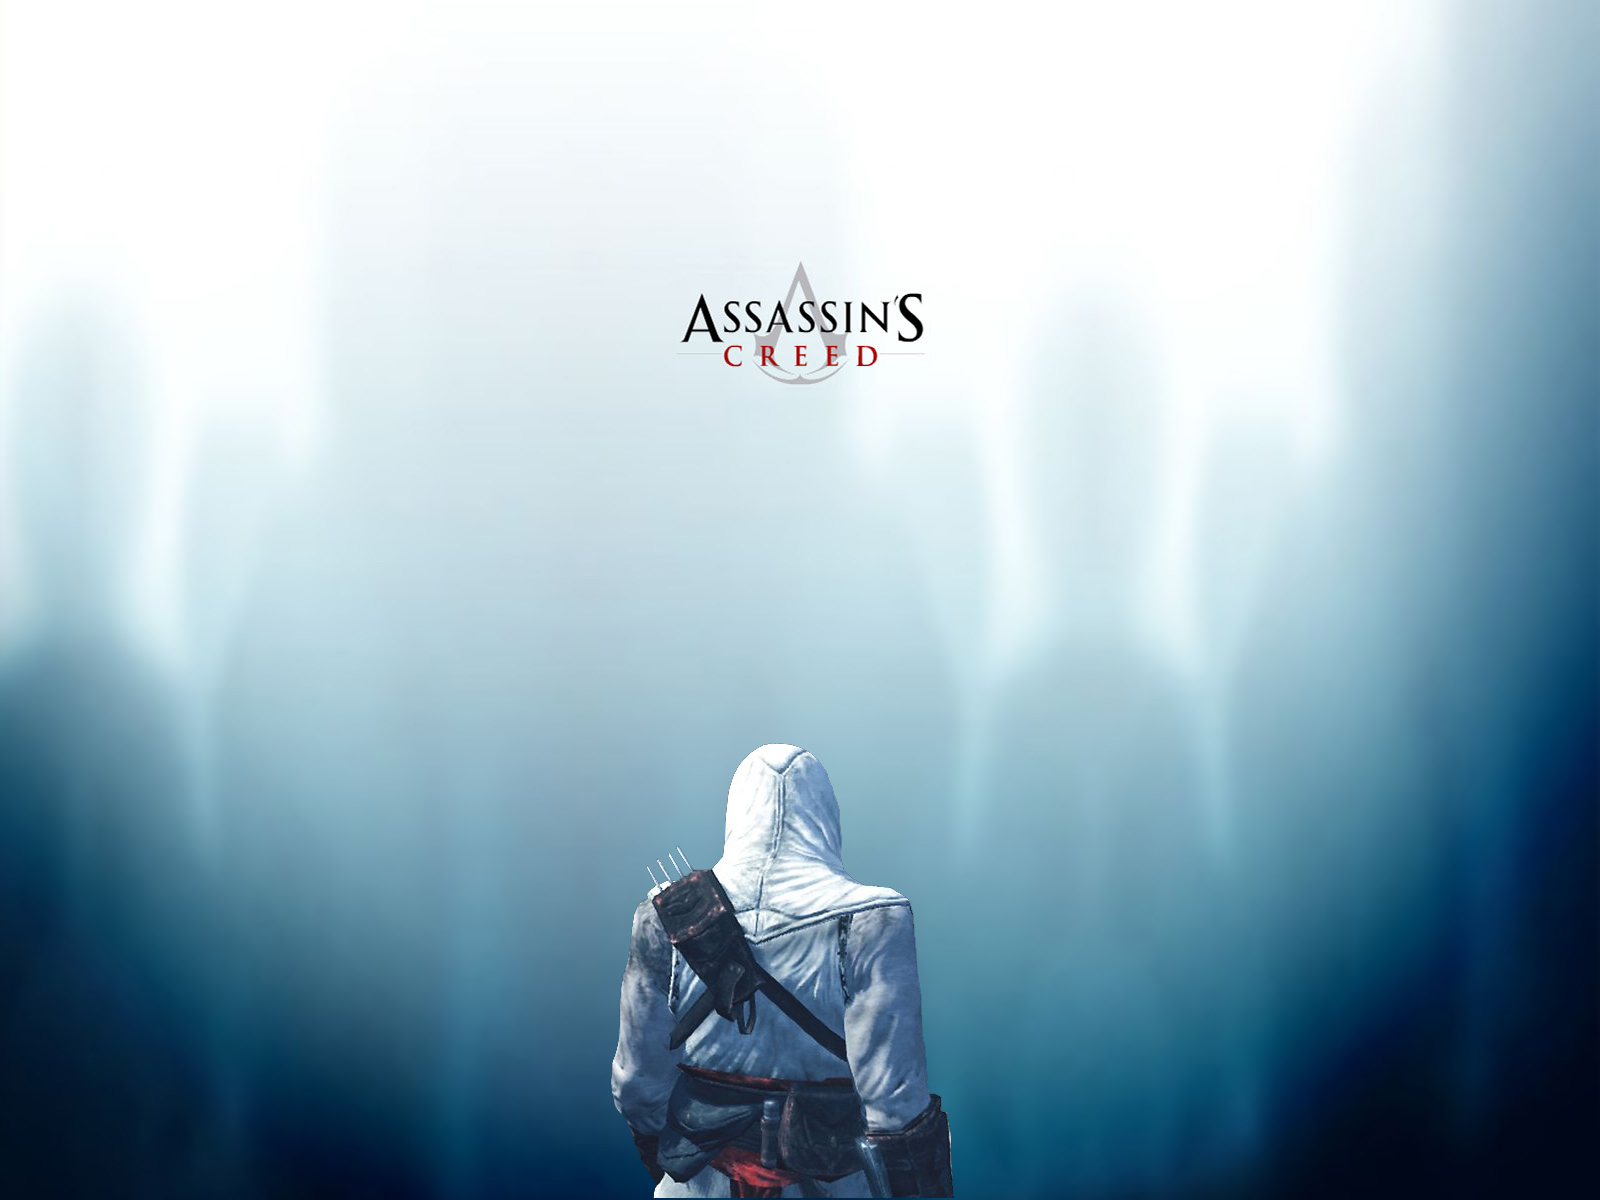 Assassin S Creed Brotherhood